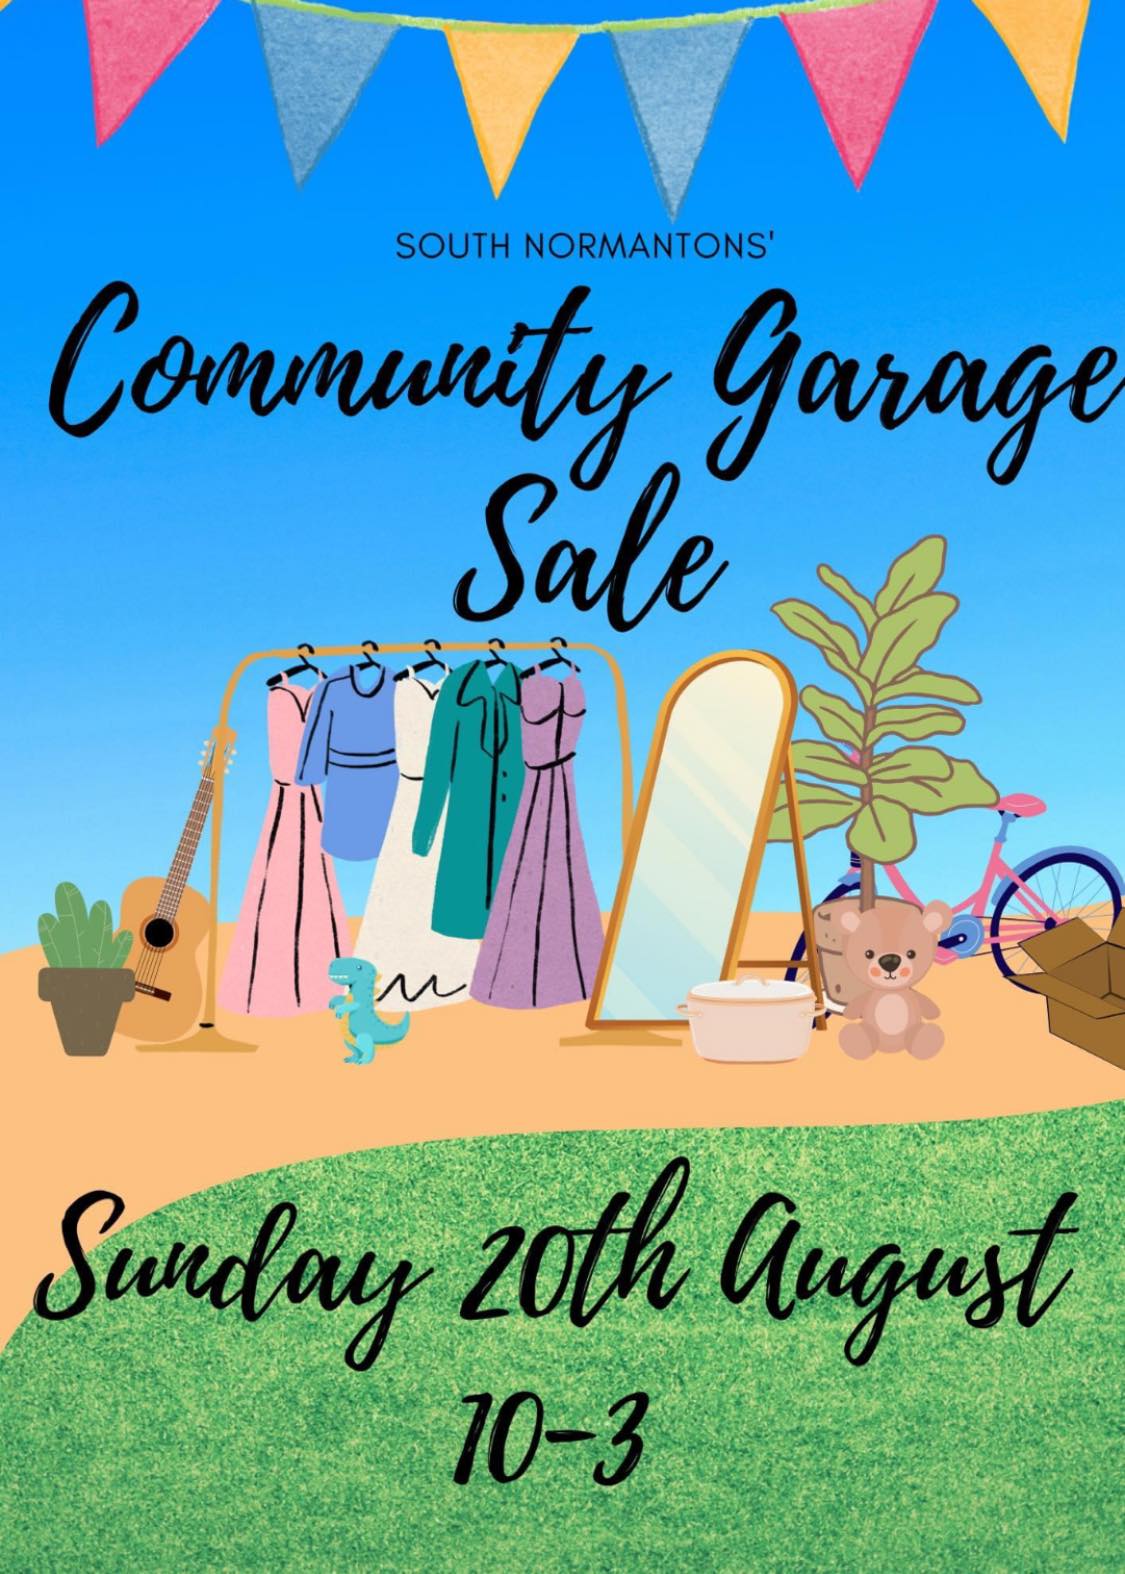 South Normanton Community Garage Sale